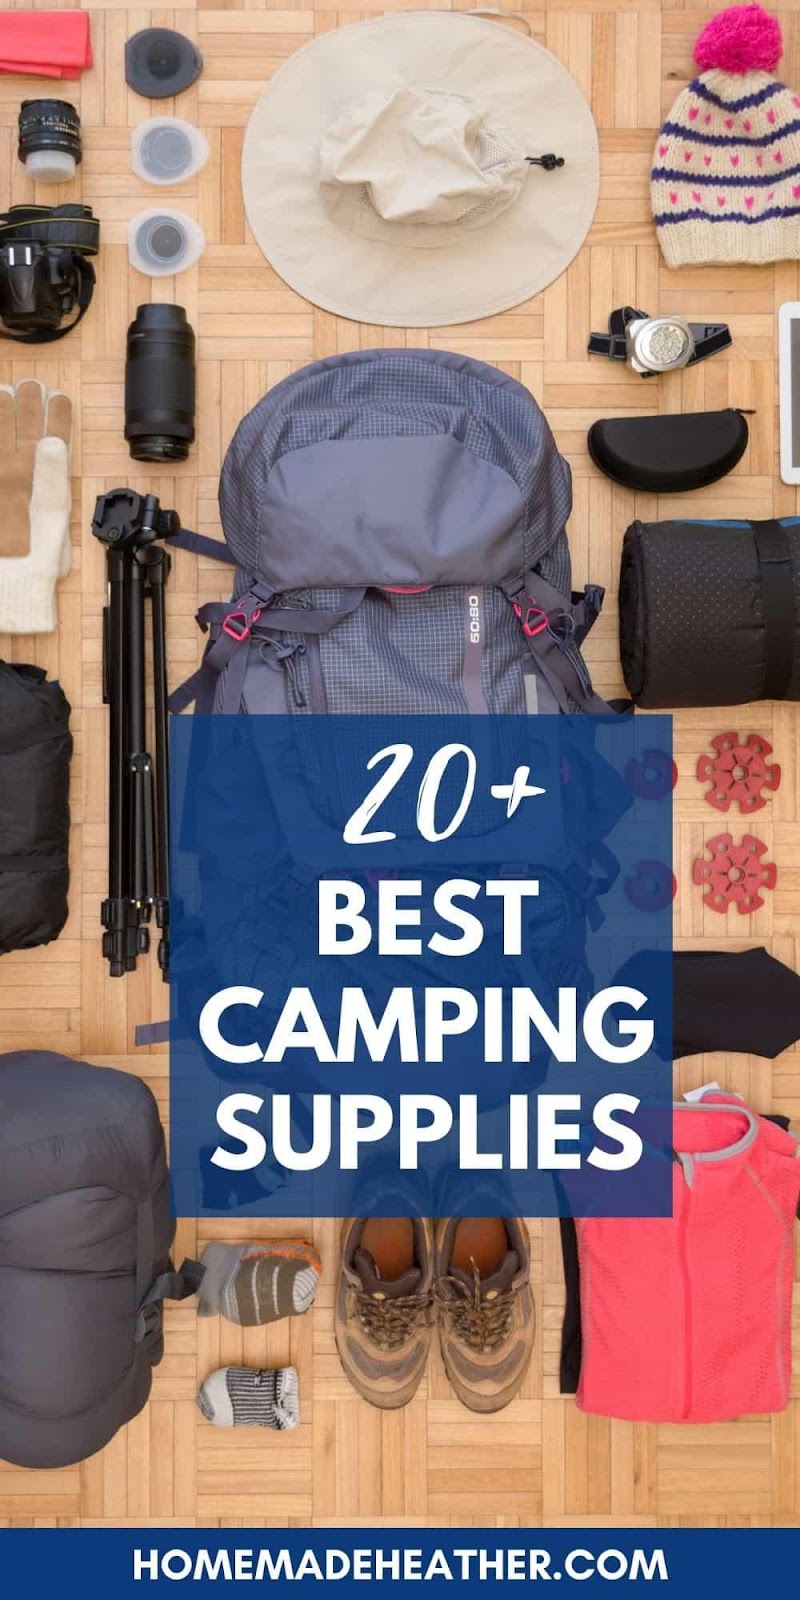 https://i0.wp.com/homemadeheather.com/wp-content/uploads/2021/05/best-camping-supplies.jpg